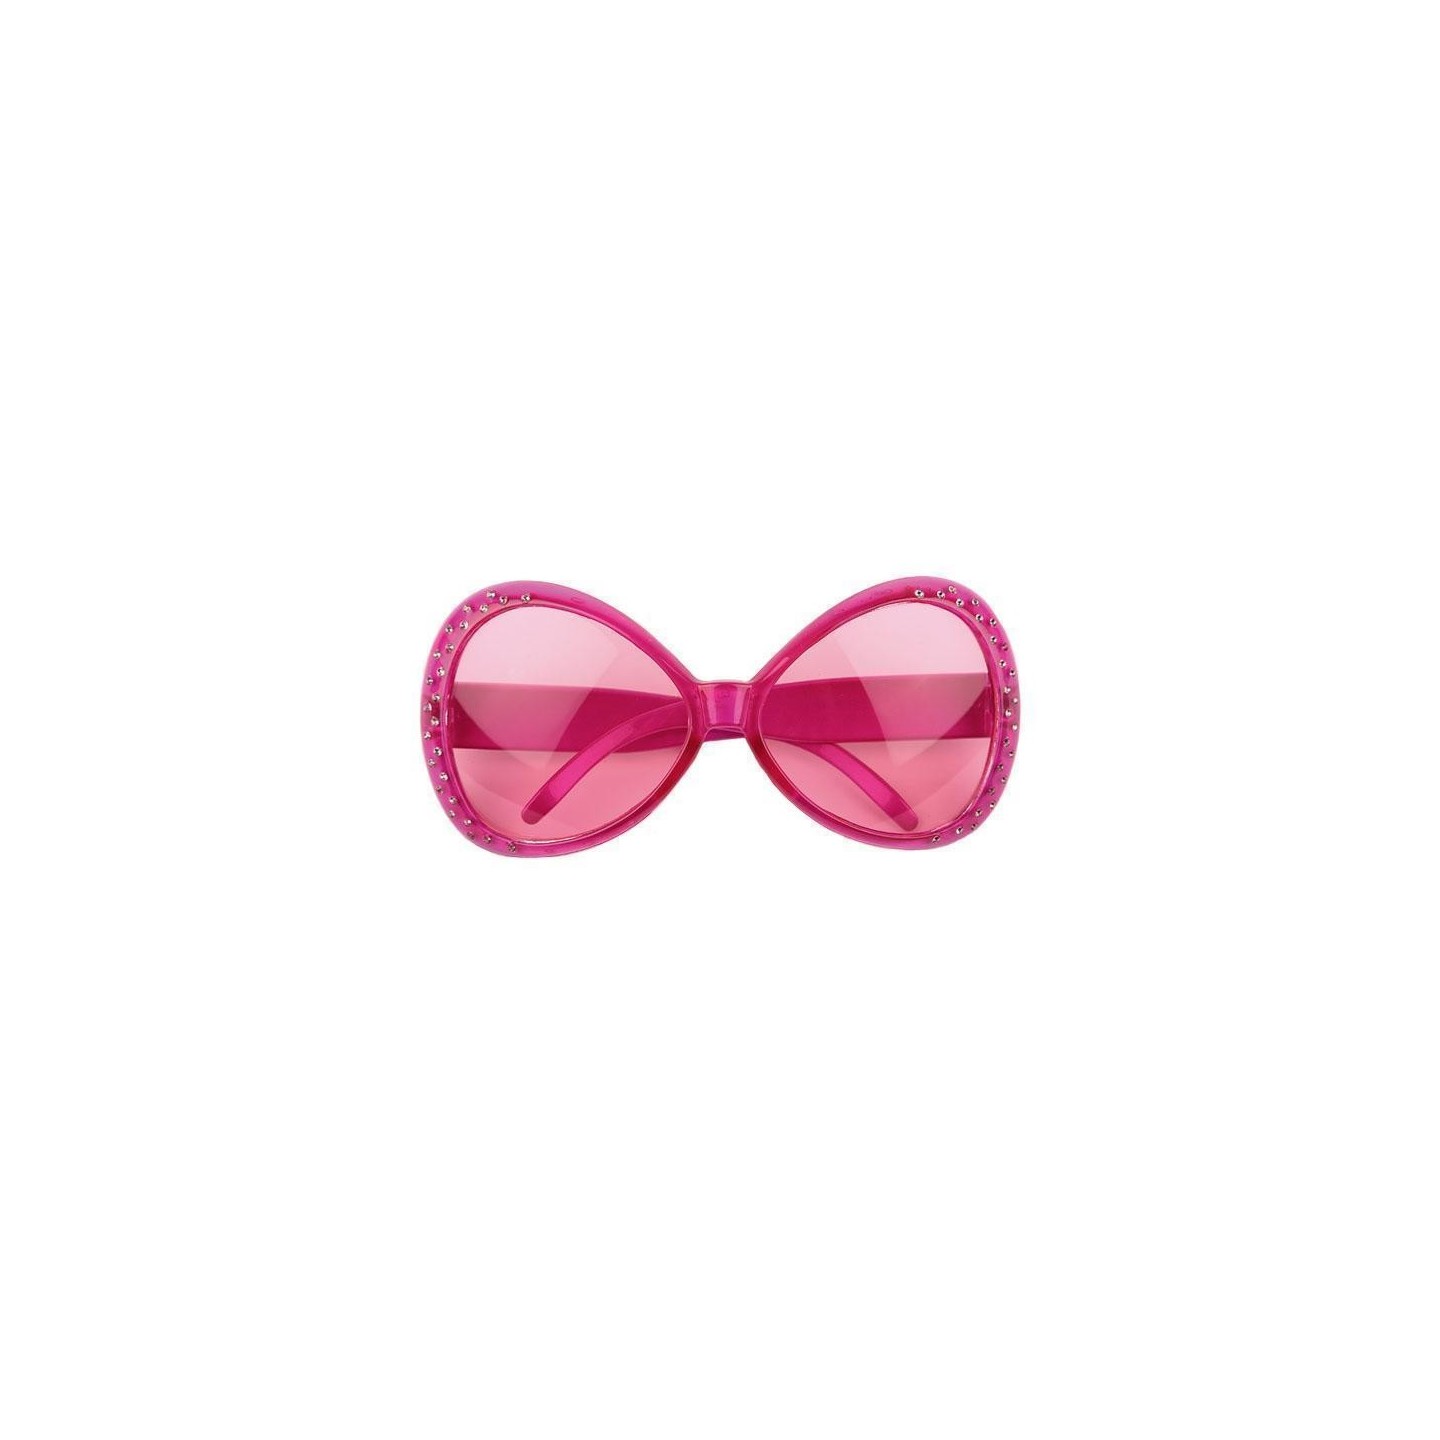 Feestbril roze bril carnaval disco partybril